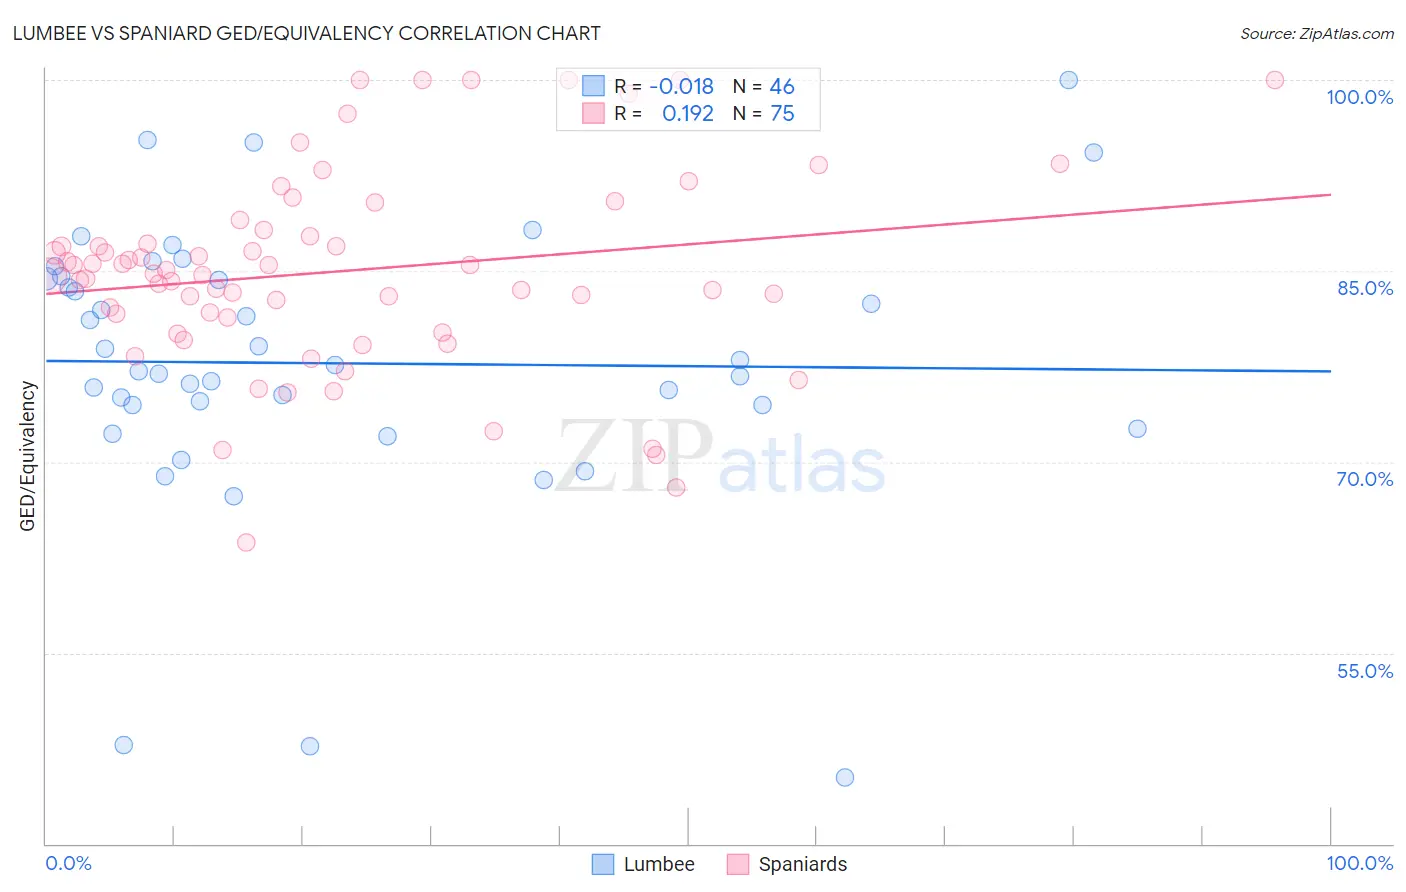 Lumbee vs Spaniard GED/Equivalency